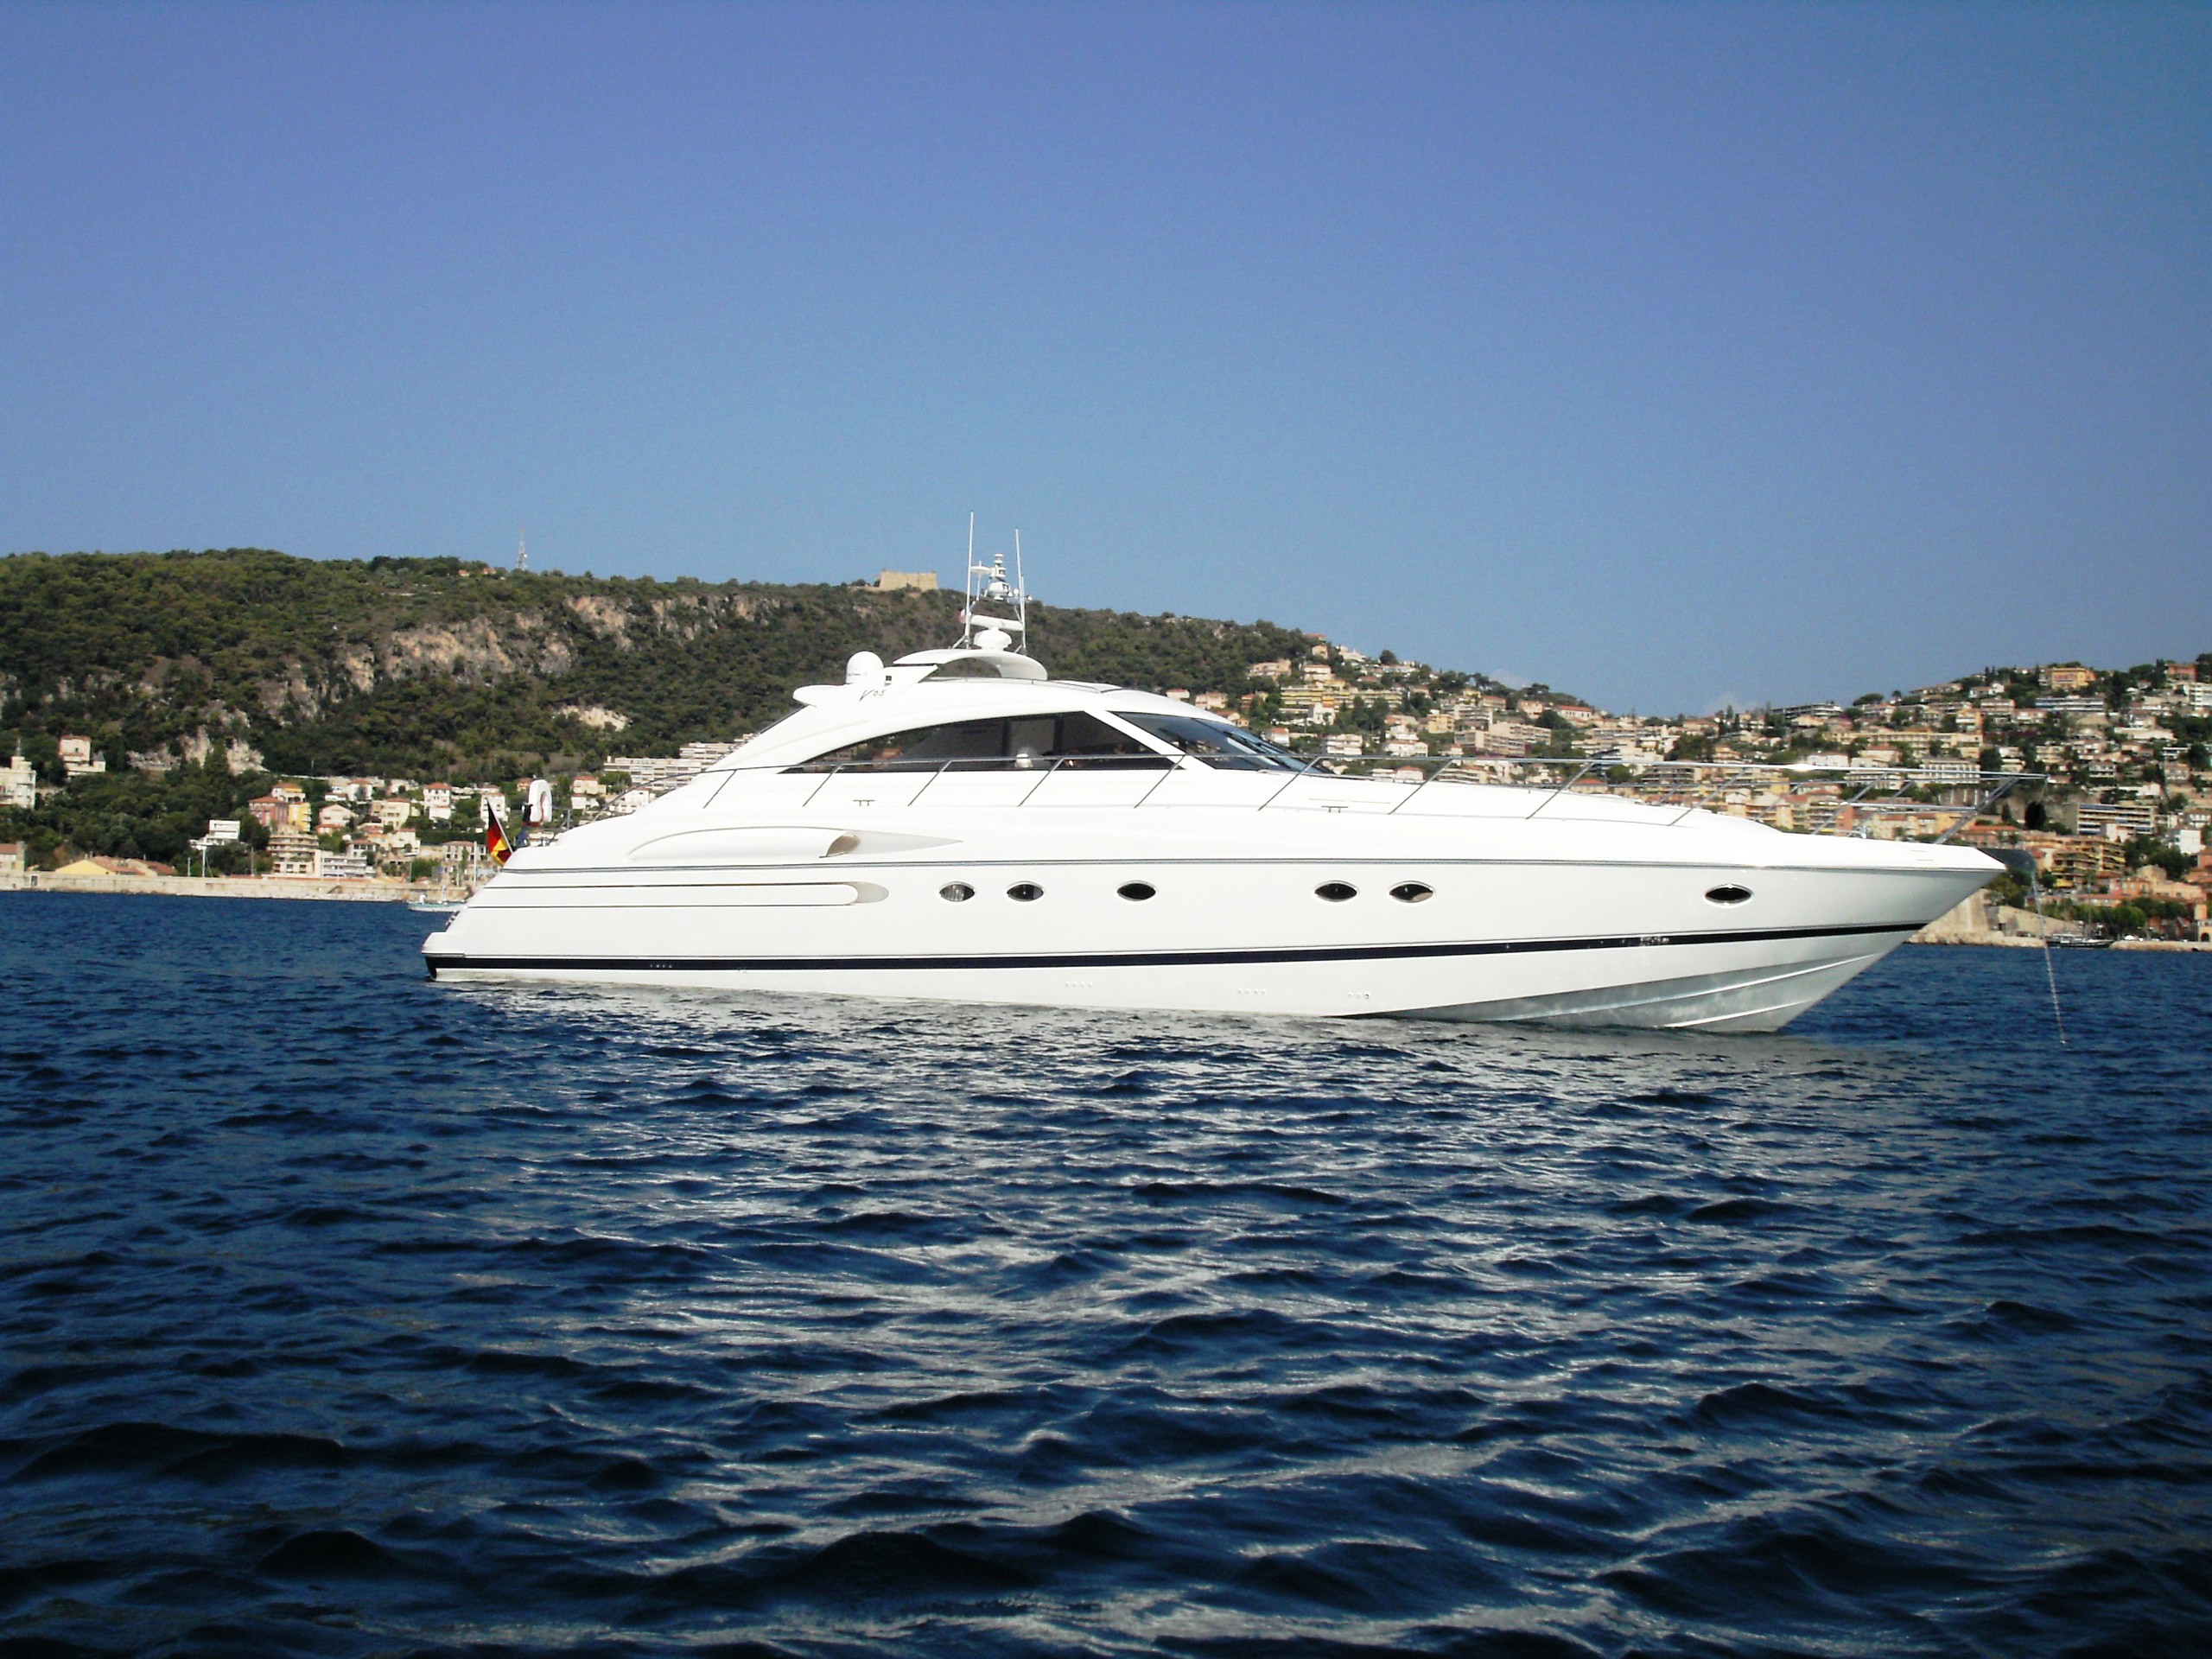 pura vida yacht charter